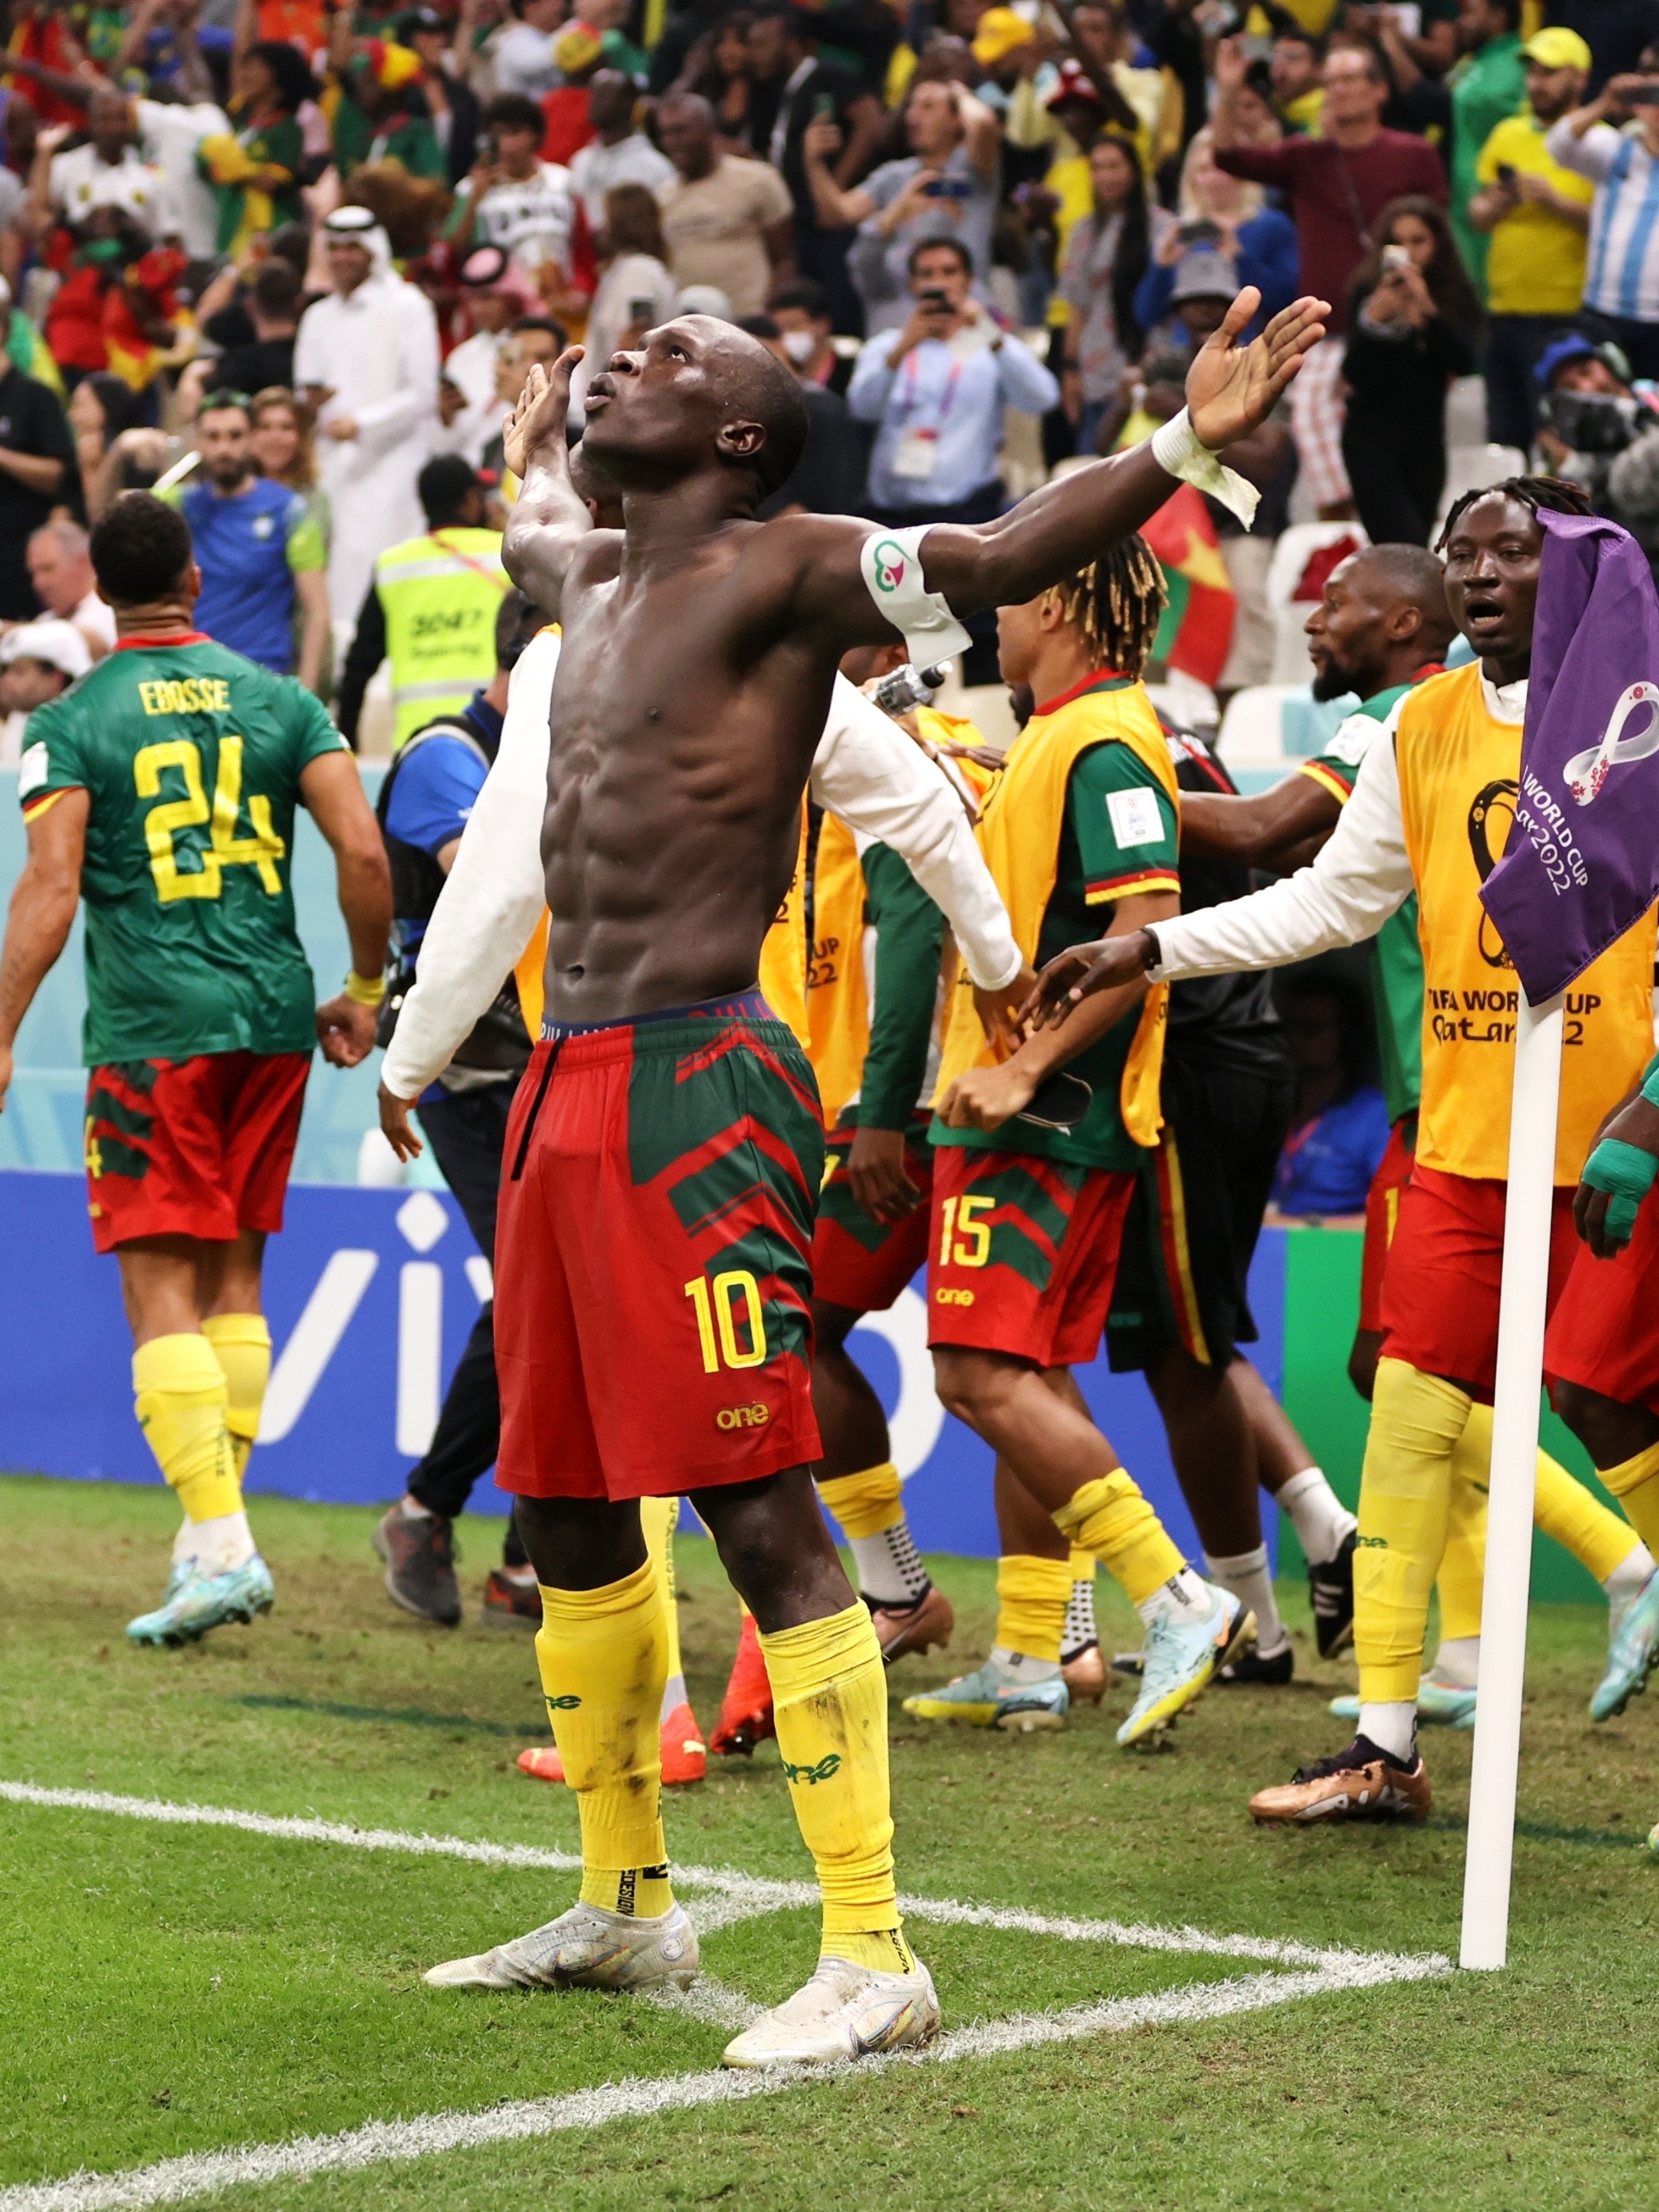 Copa 2022: Brasil x Camarões — Museu do Futebol